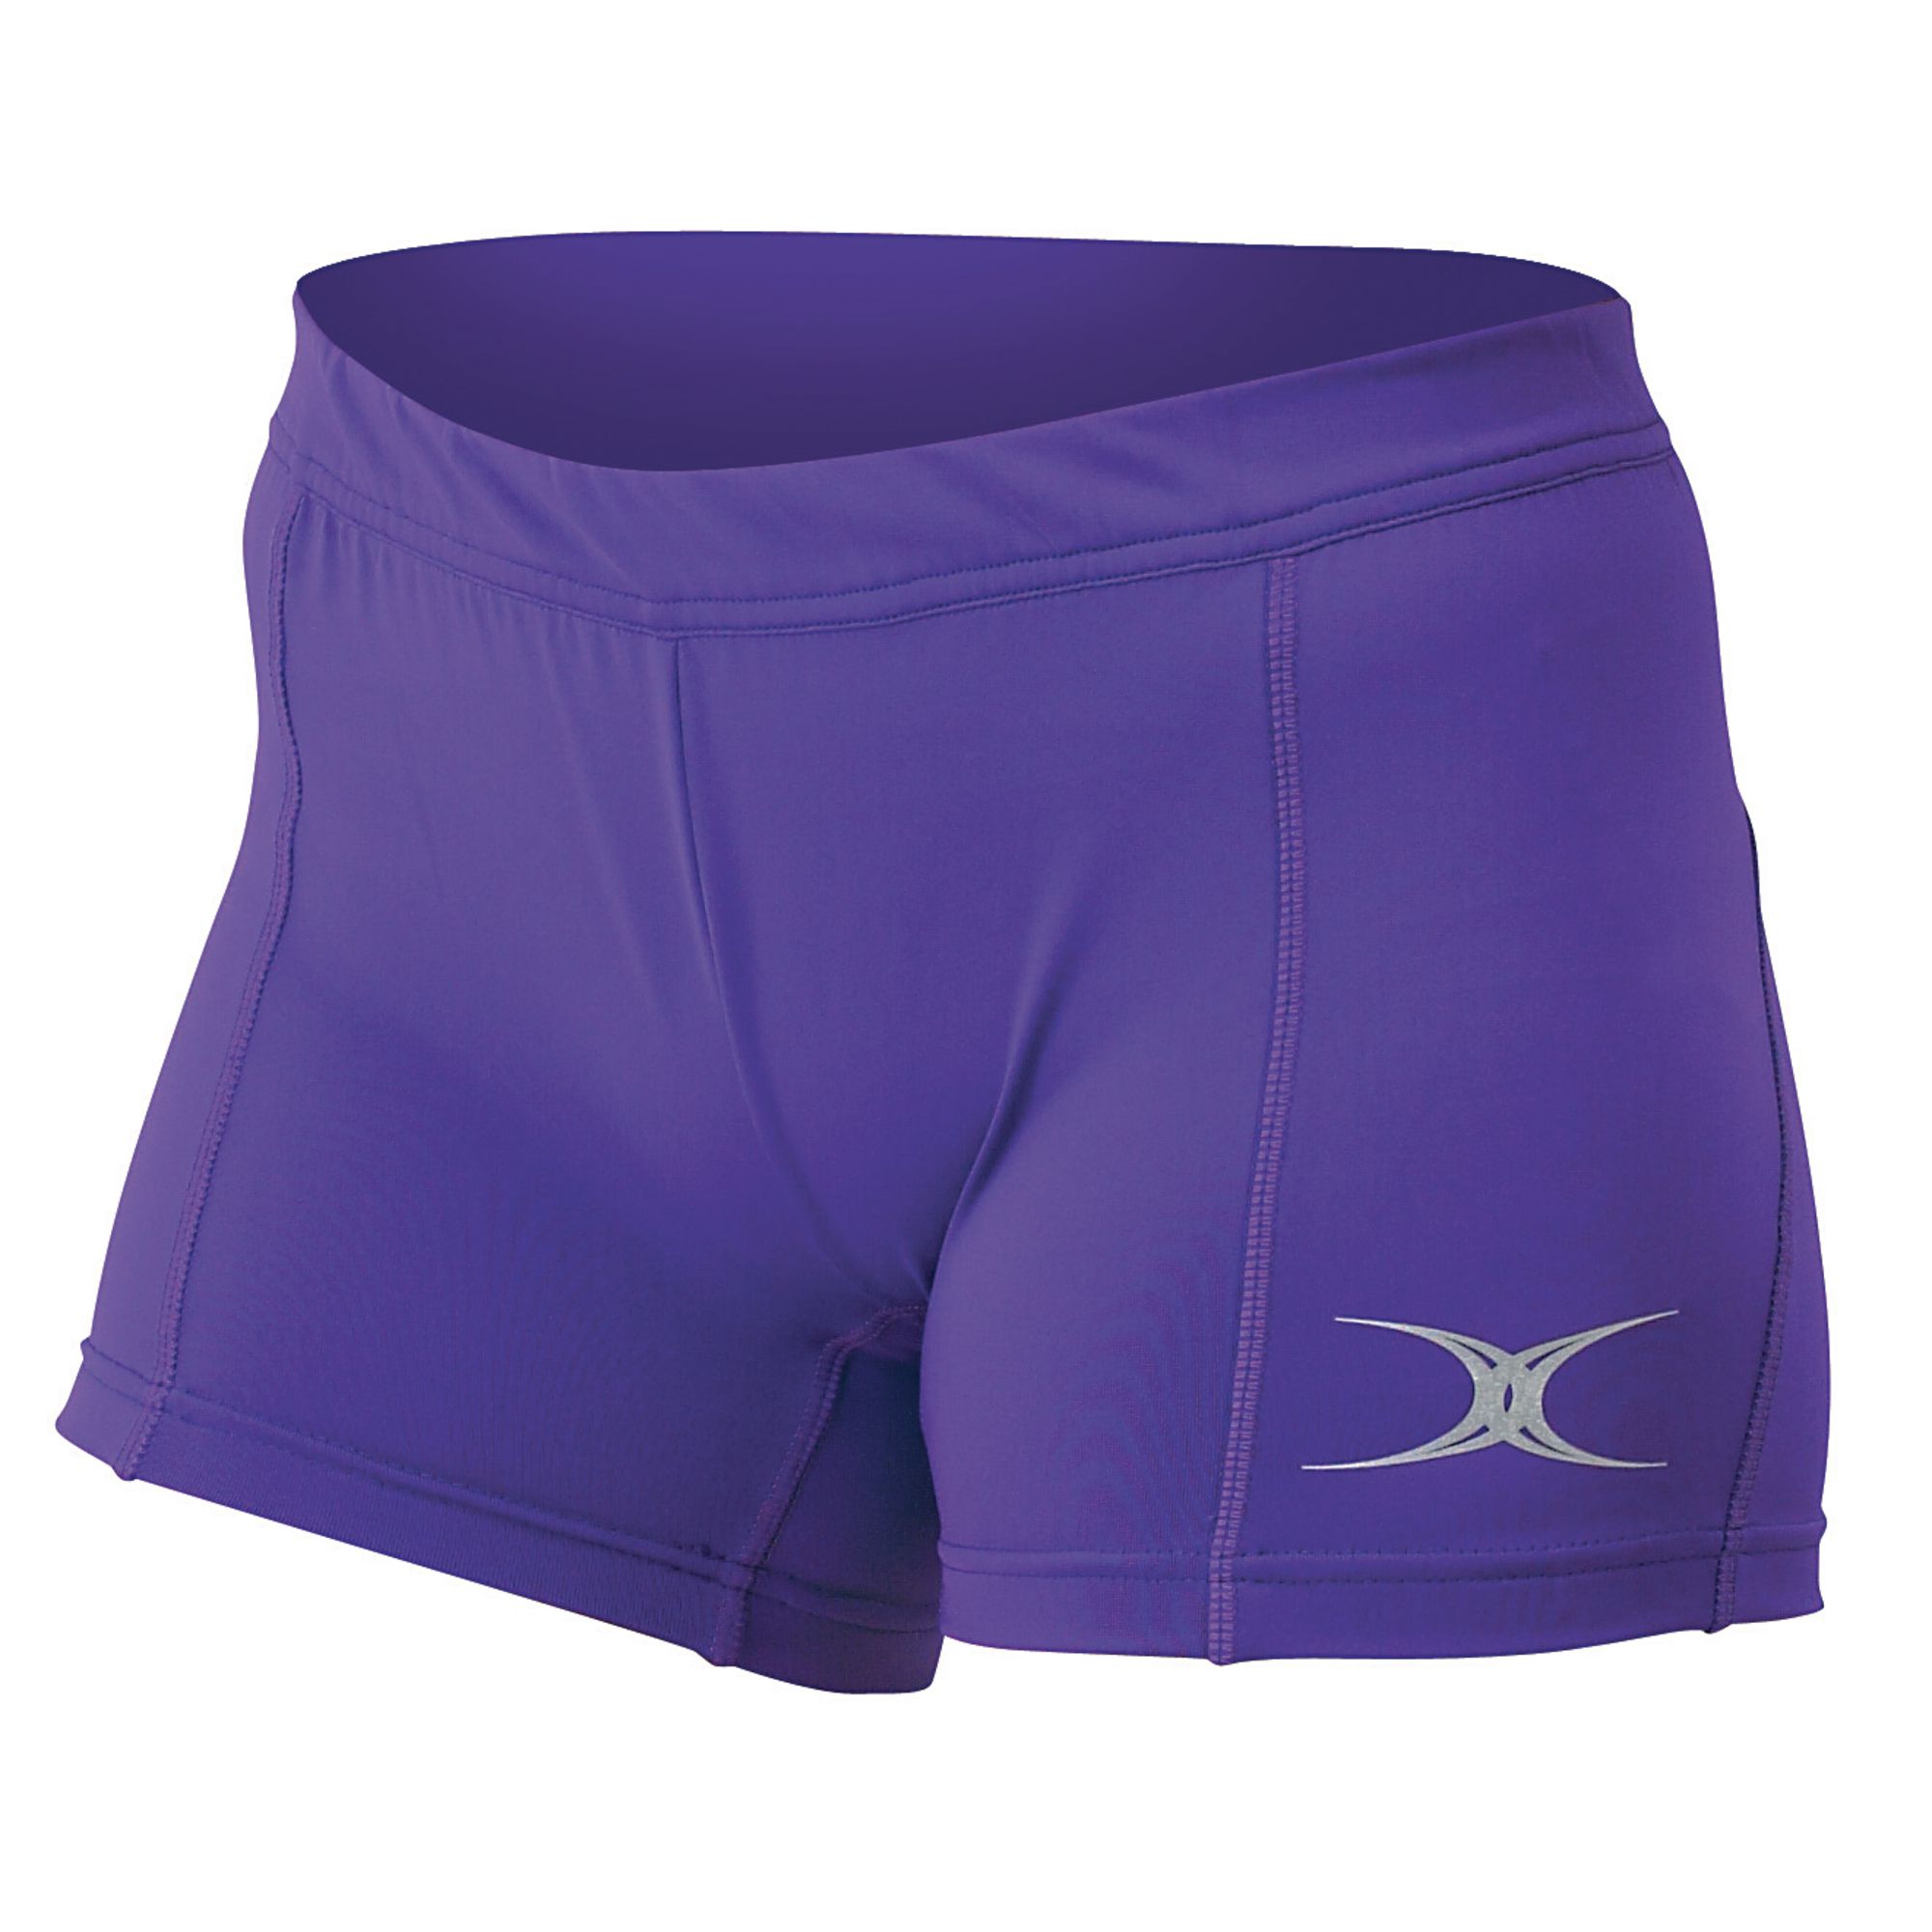 Gilbert Eclipse Nball Shorts S20 Purple